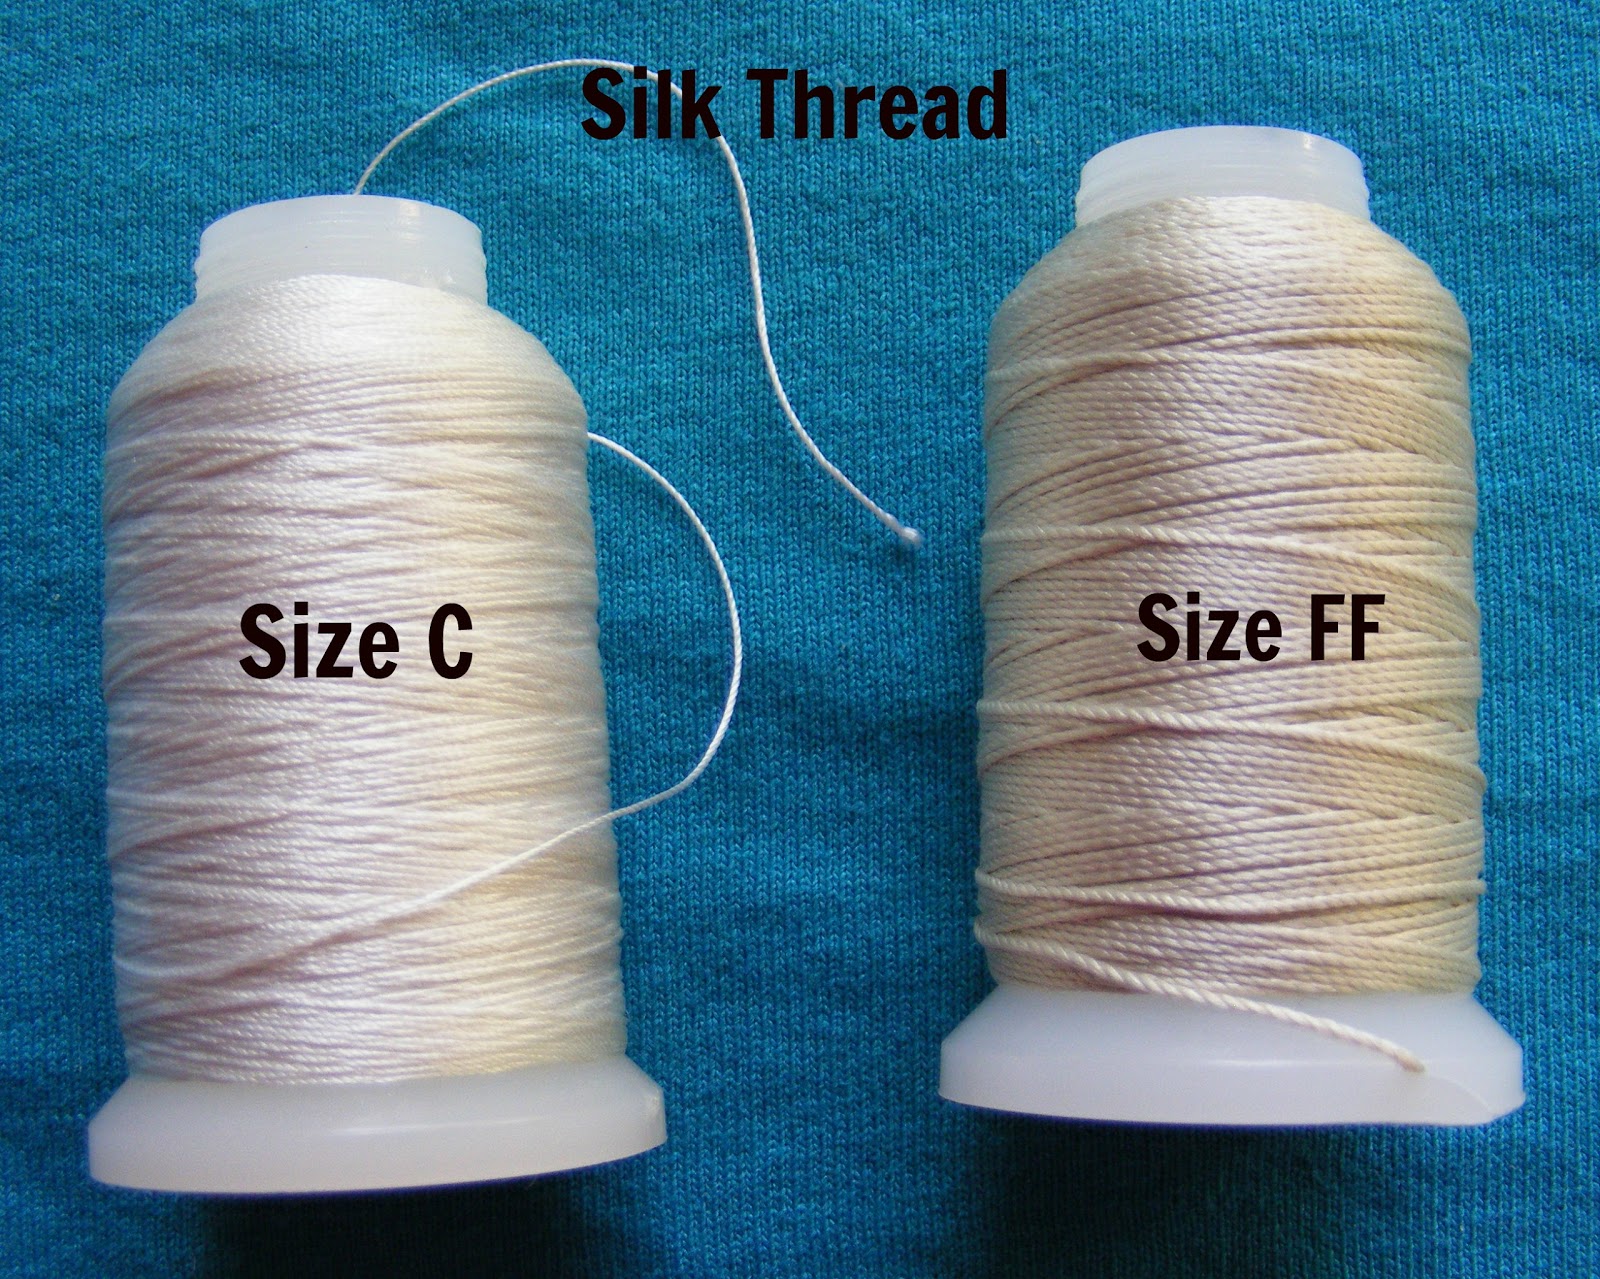 purely silk thread size chart - Part.tscoreks.org